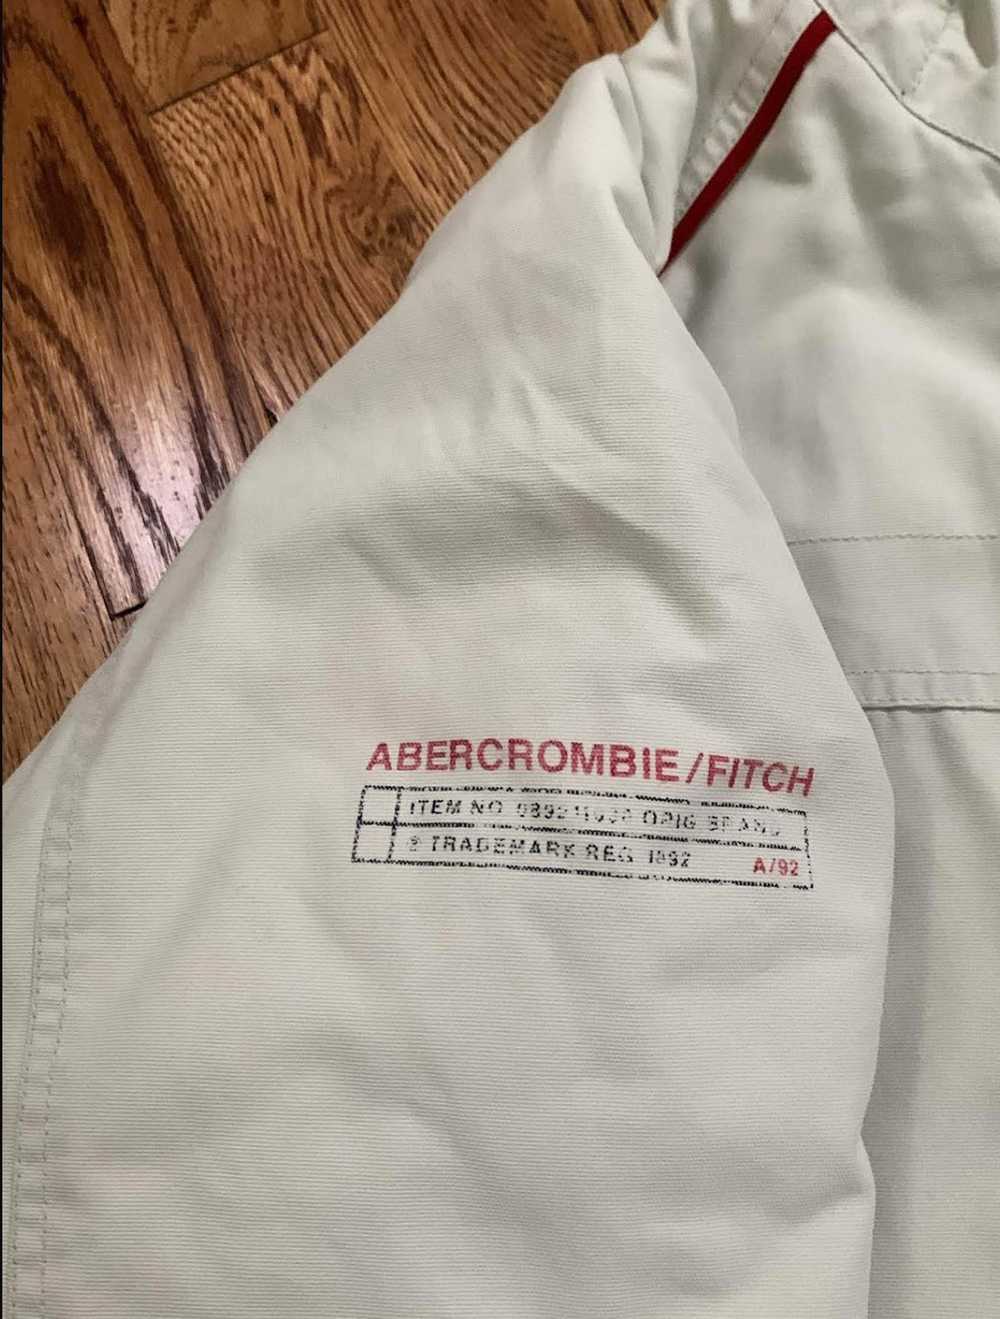 Abercrombie & Fitch Vintage Abercrombie A/92 Tech… - image 5